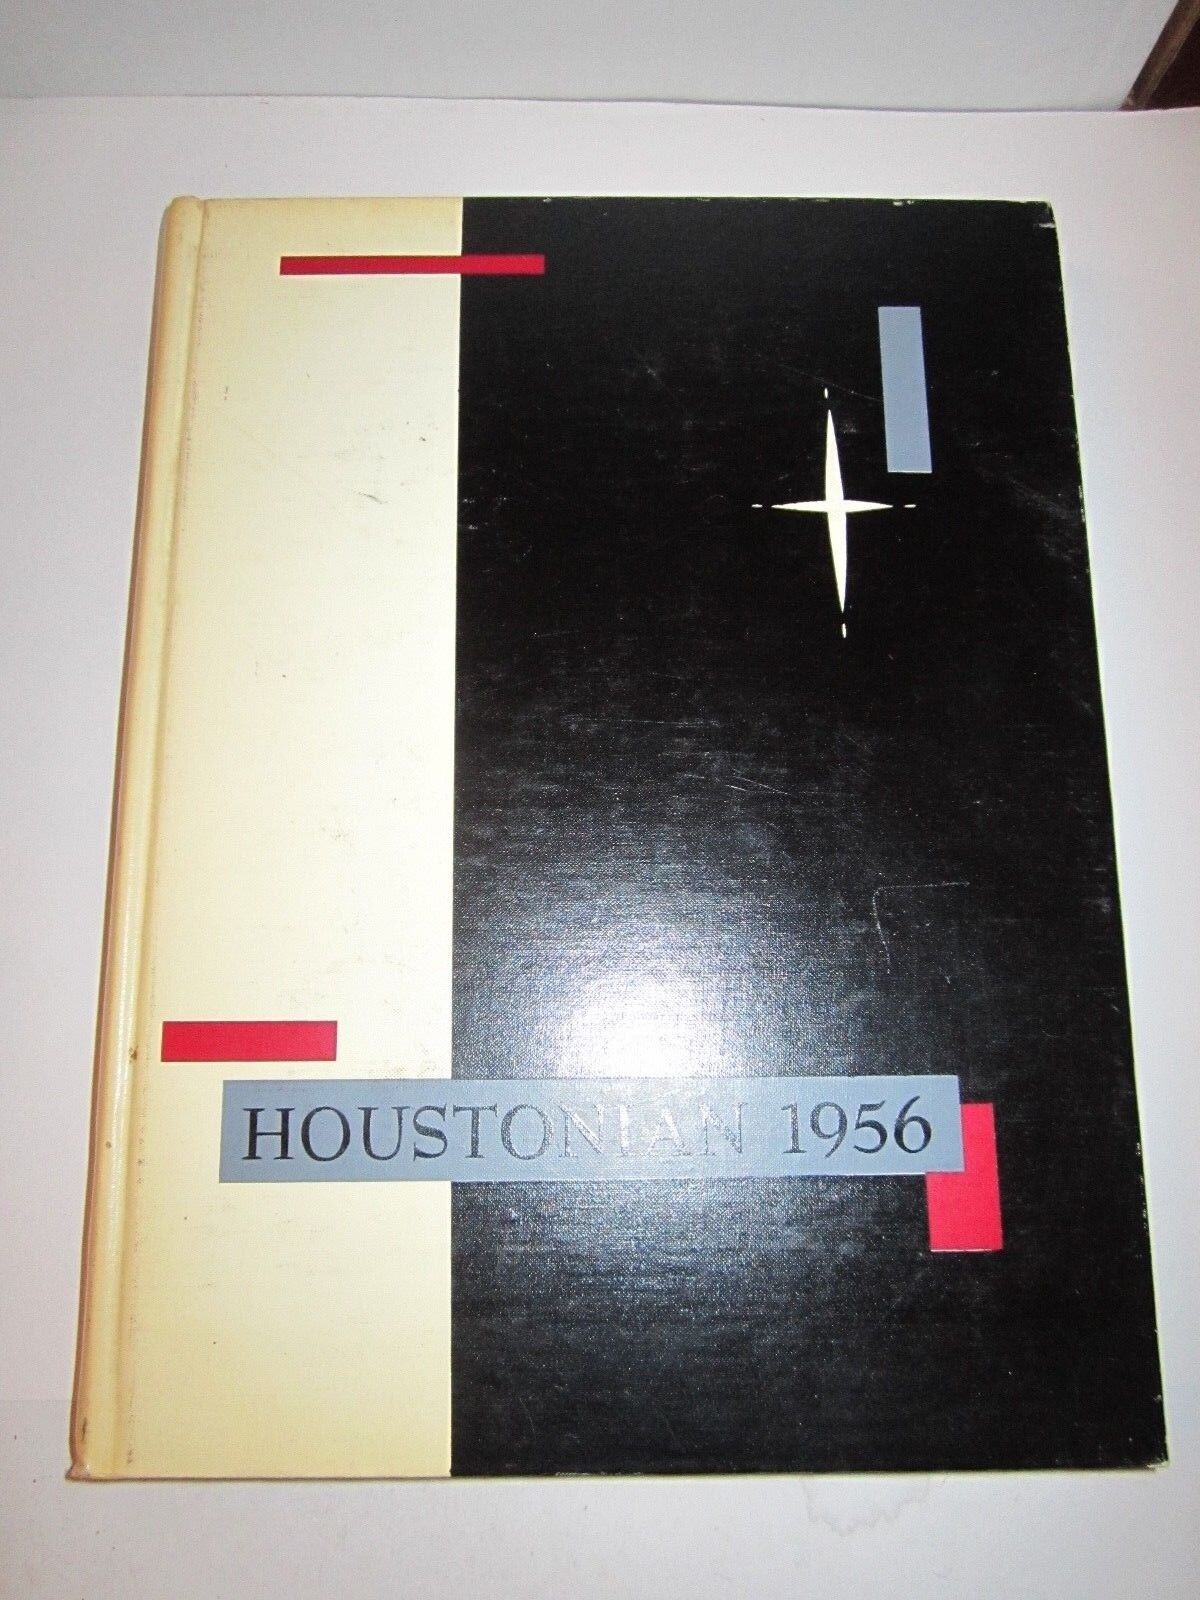 1956 UNIVERSITY OF HOUSTON YEARBOOK - THE HOUSTONIAN - SEE PICS 